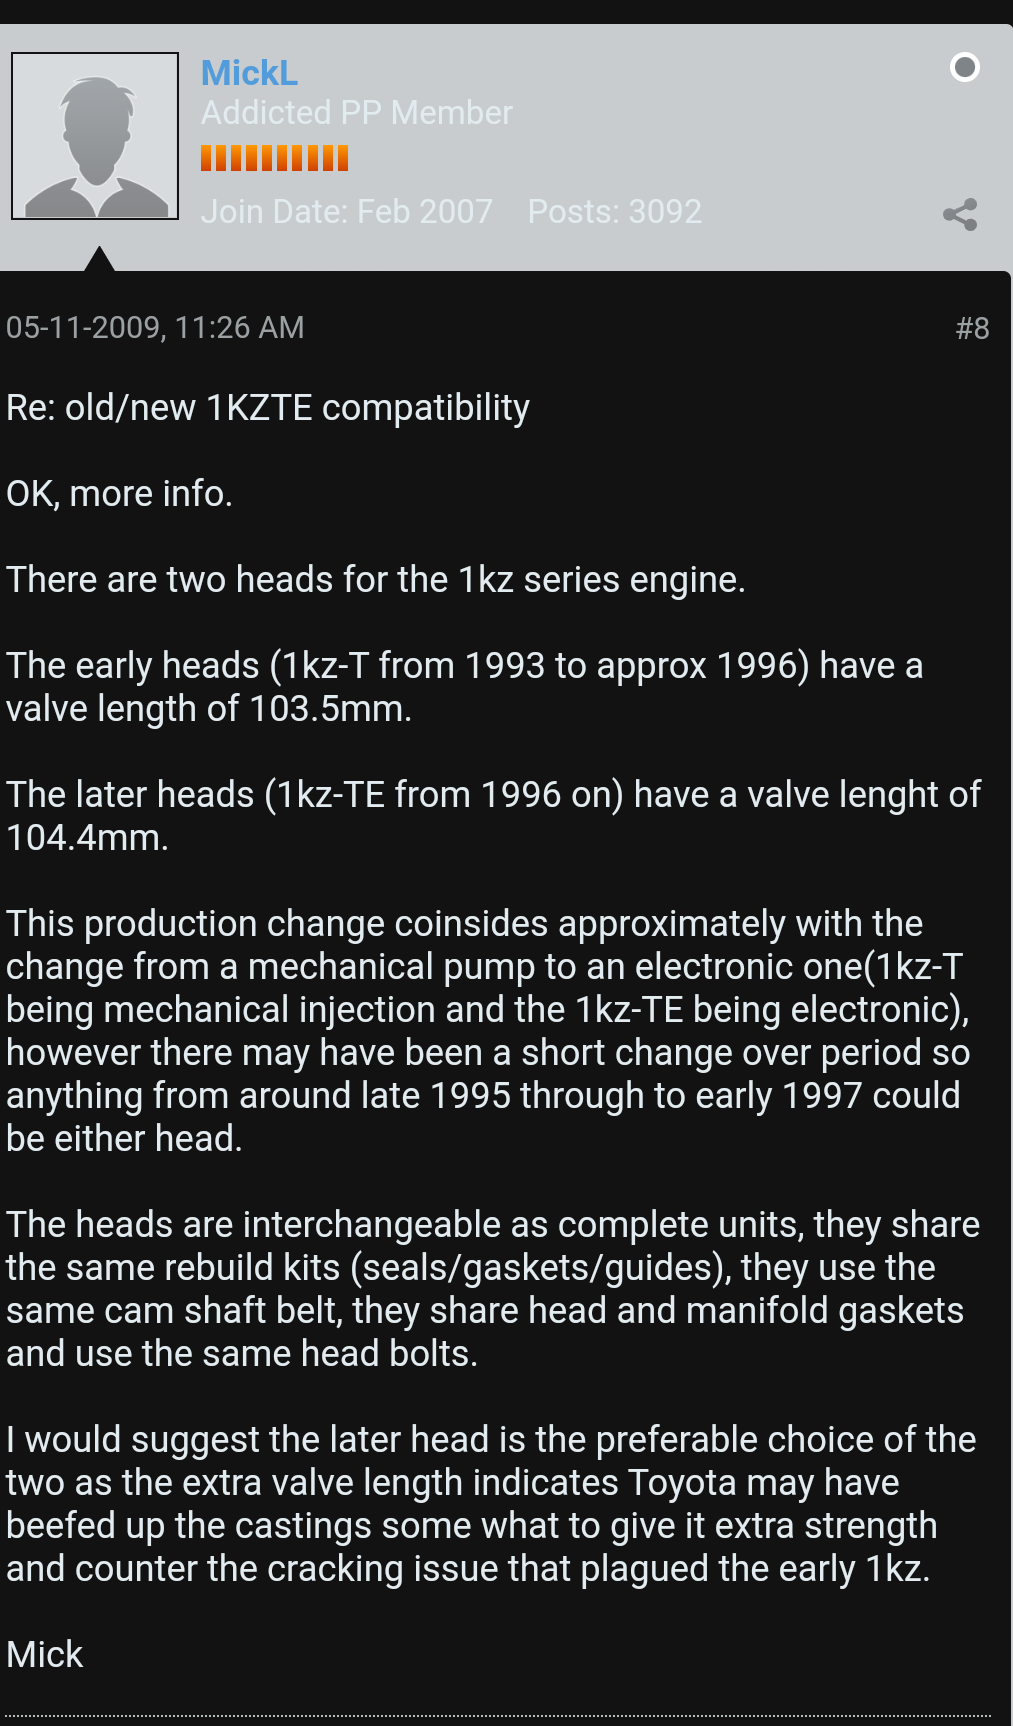 2000 Hilux 1KZ-TE in 96' KZH100G What should a mechanic know Screen18